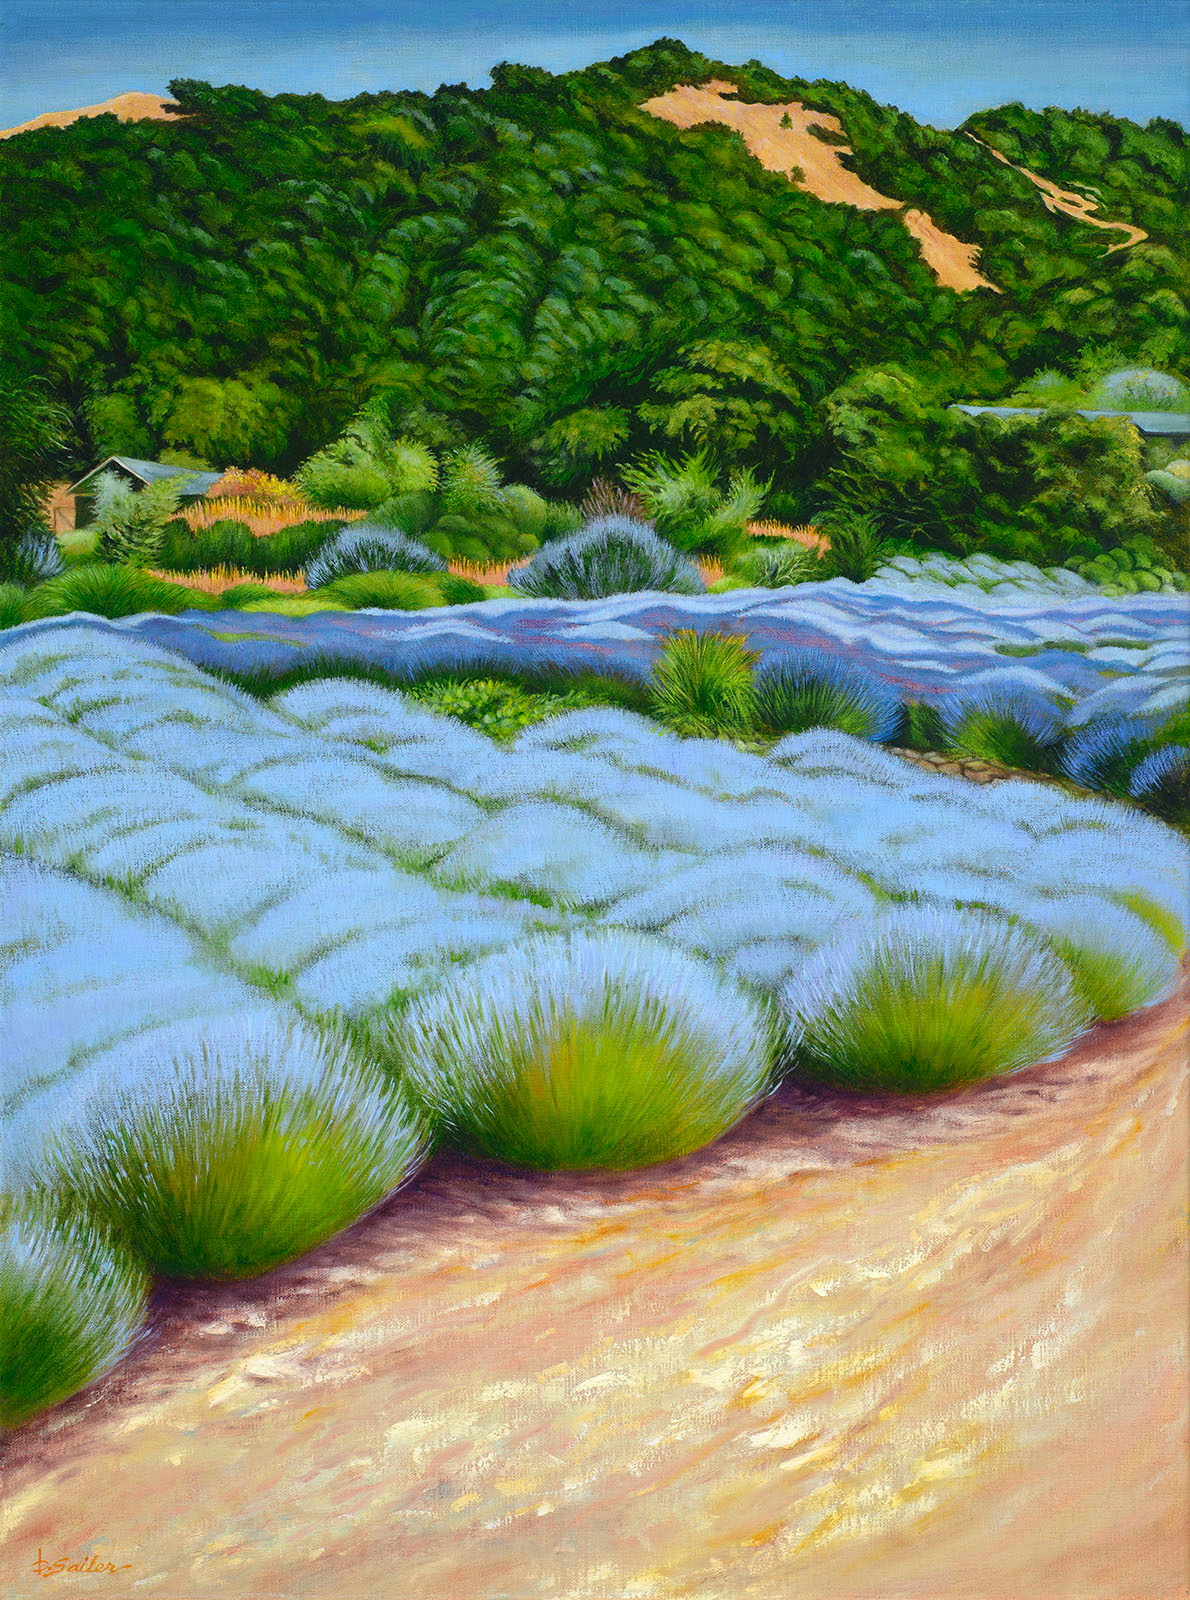 Lavender fields of matanzas creek winery aqkmxm